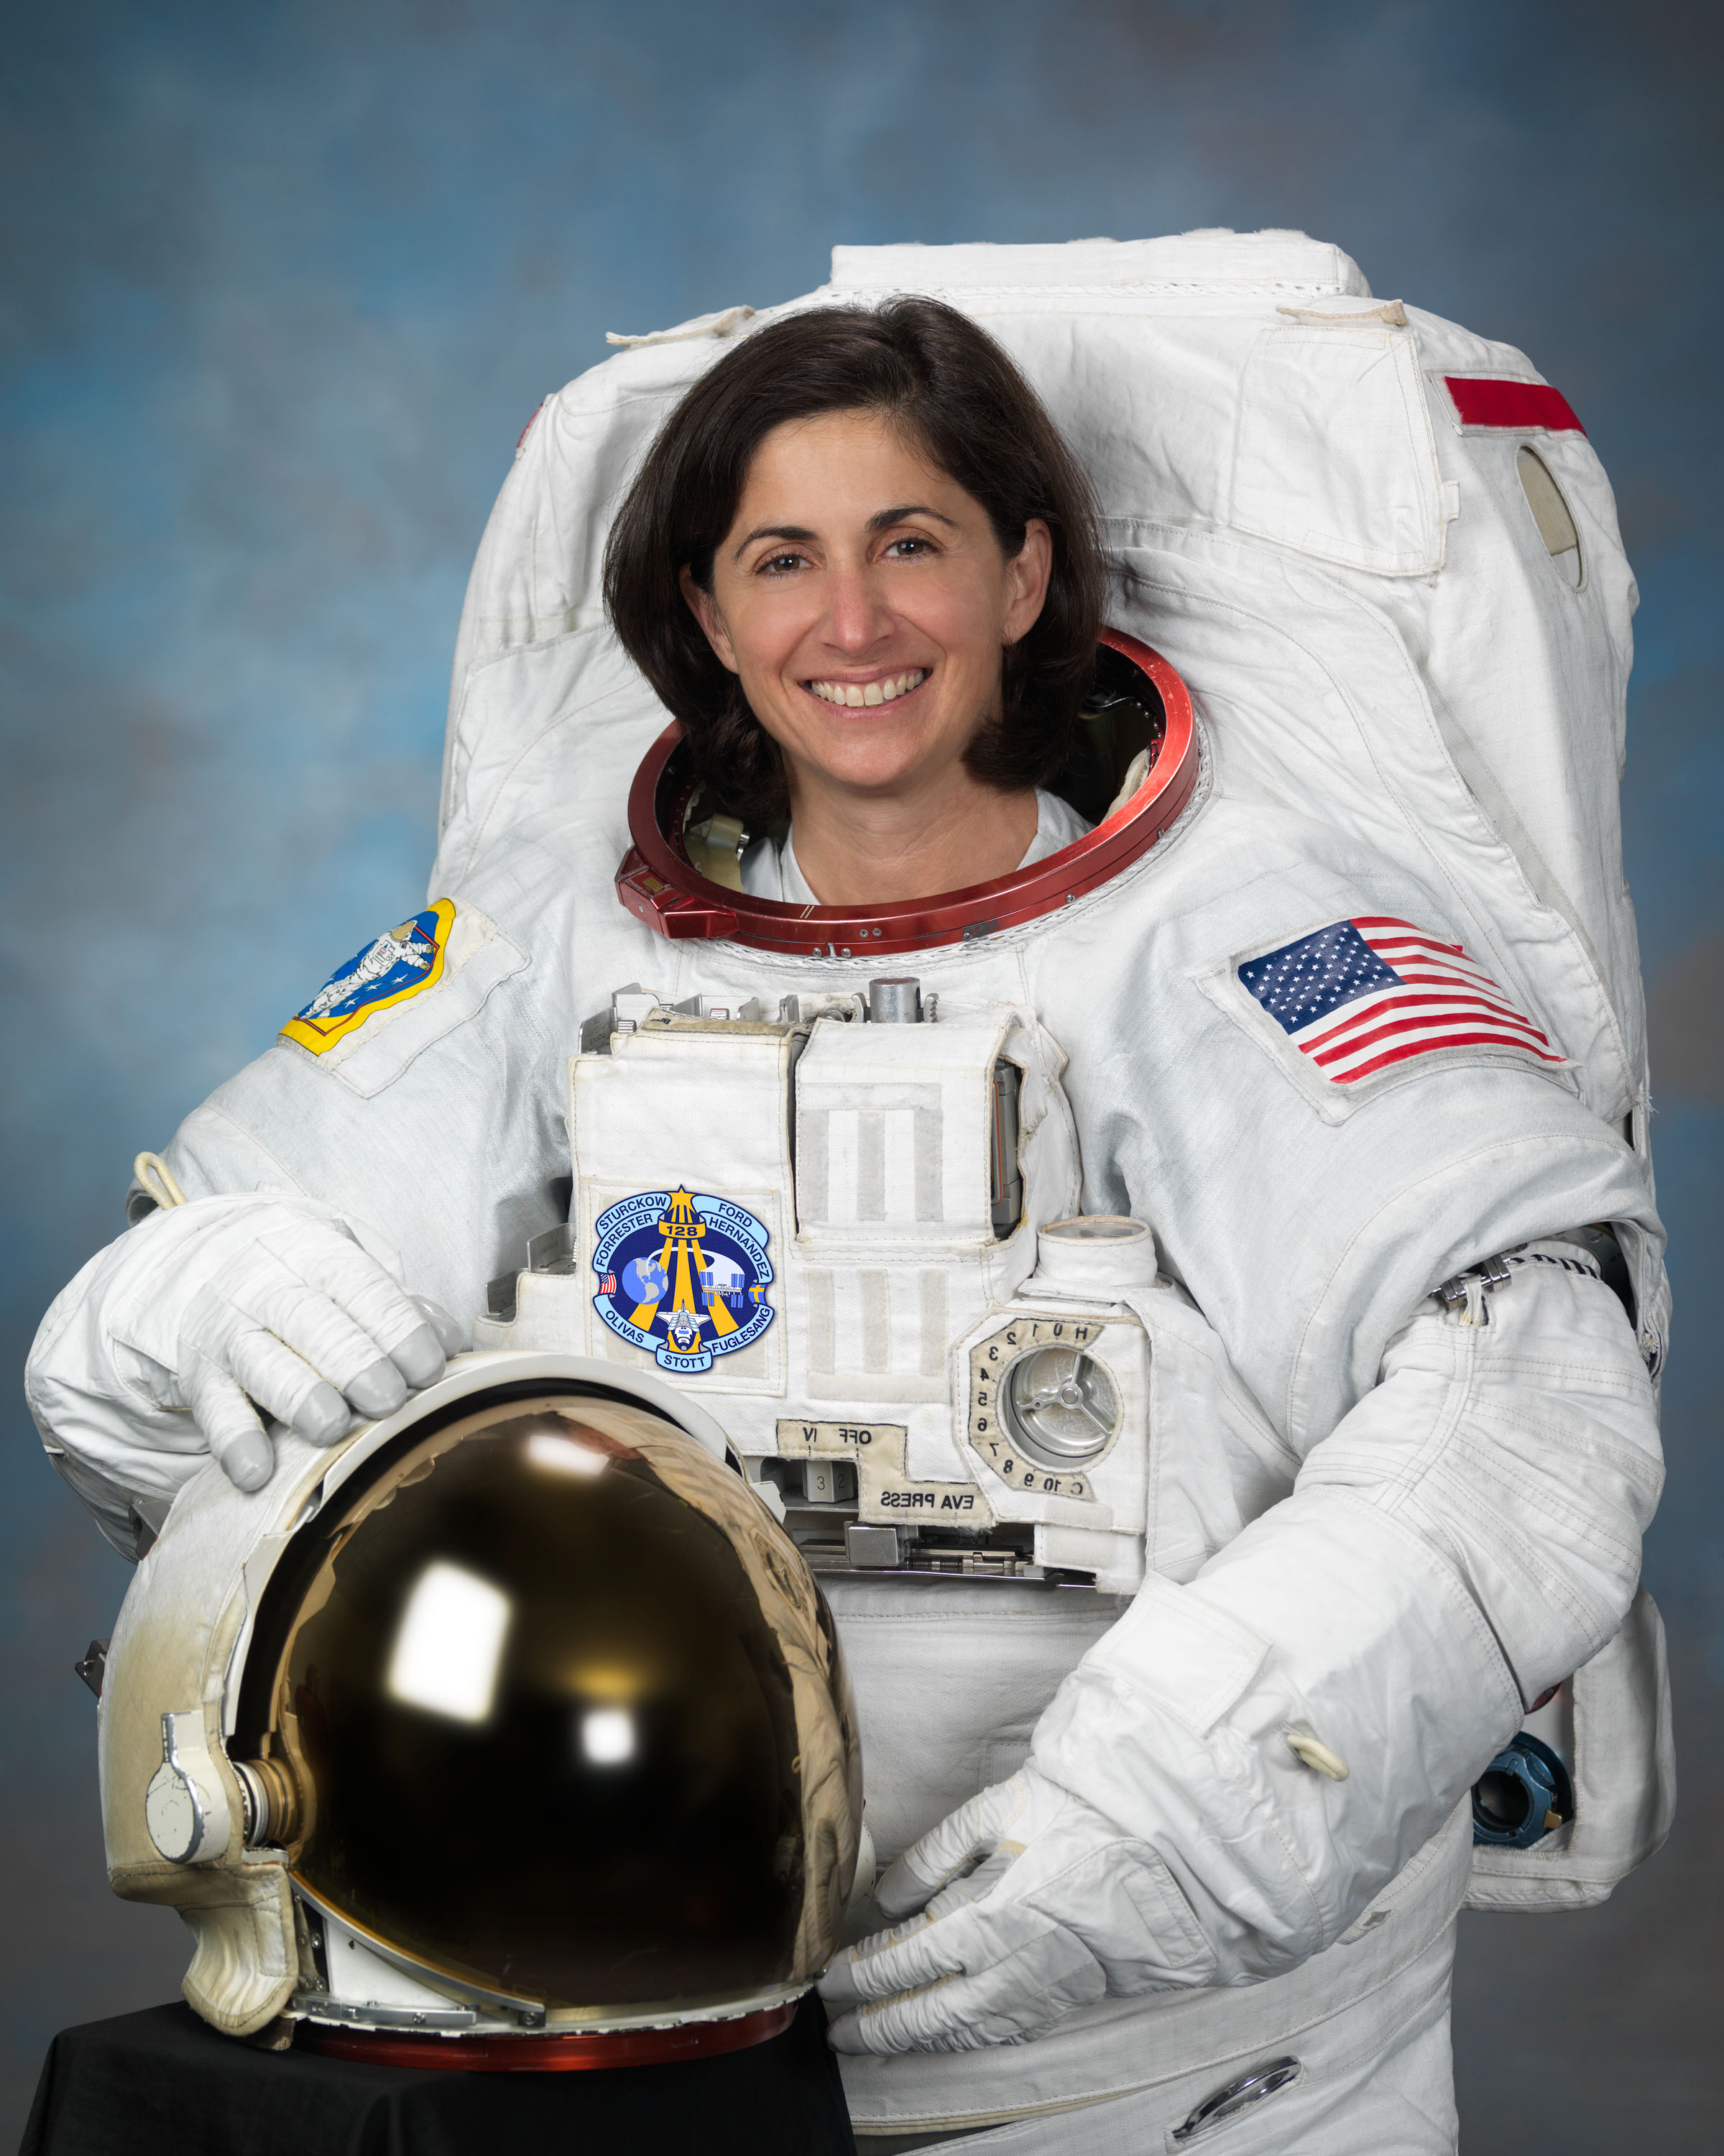 Official Portrait of NASA Astronaut Nicole Stott in an EUM. Photo Date: July 26, 2011. Location: Building 8, Room 183 - Photo Studio. Photographer: Robert Markowitz